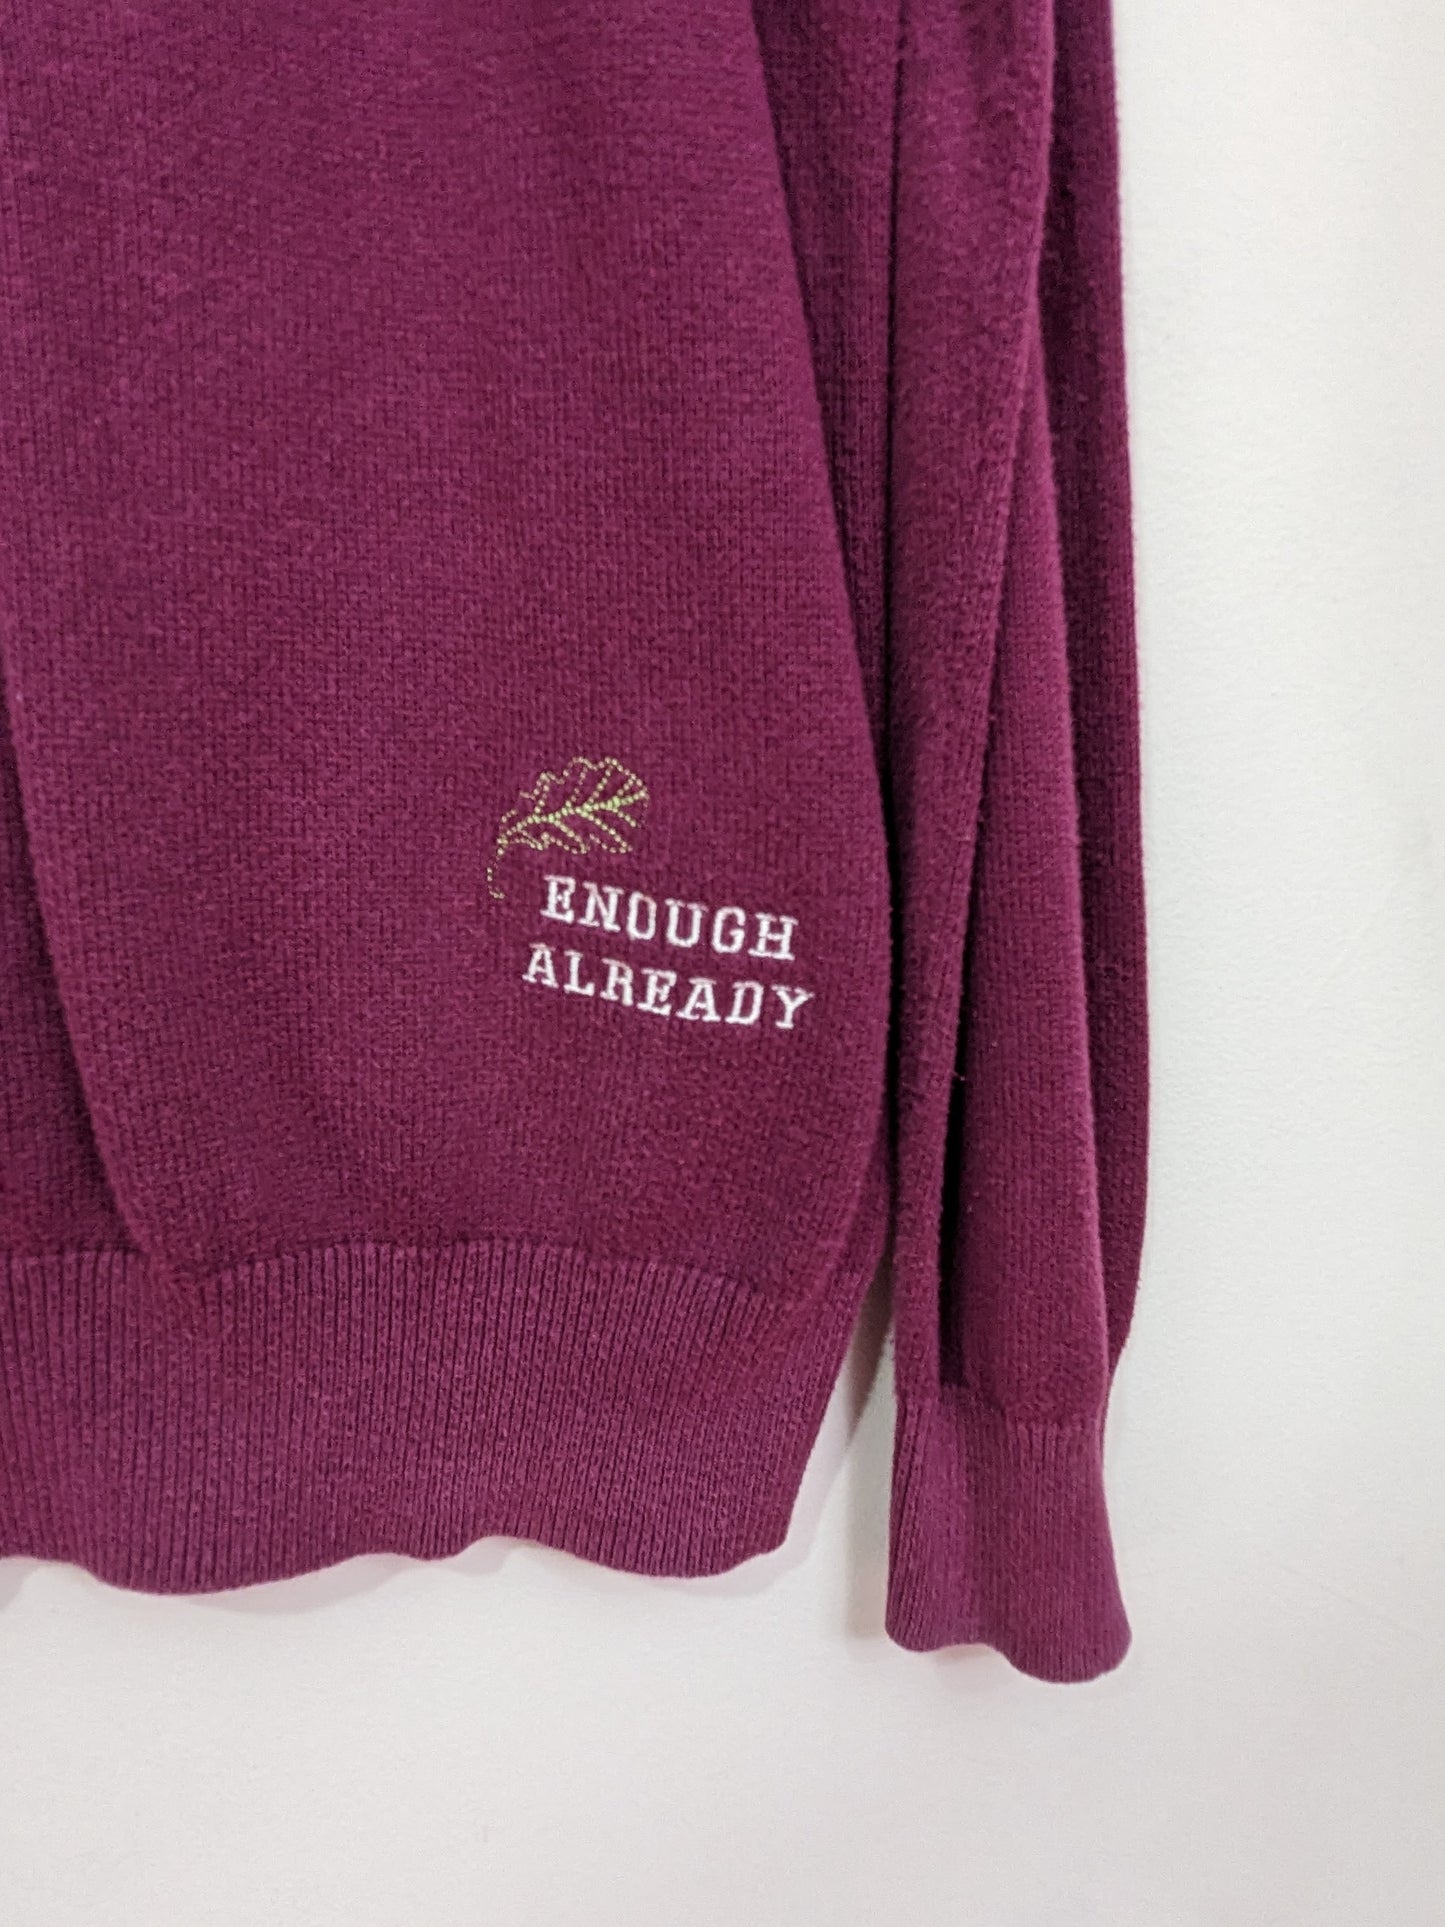 Size Men's XL Purple Knitted 1/4 Zip Reworked Sweatshirt - Embroidered Autumnal William Wordsworth Quote and Design